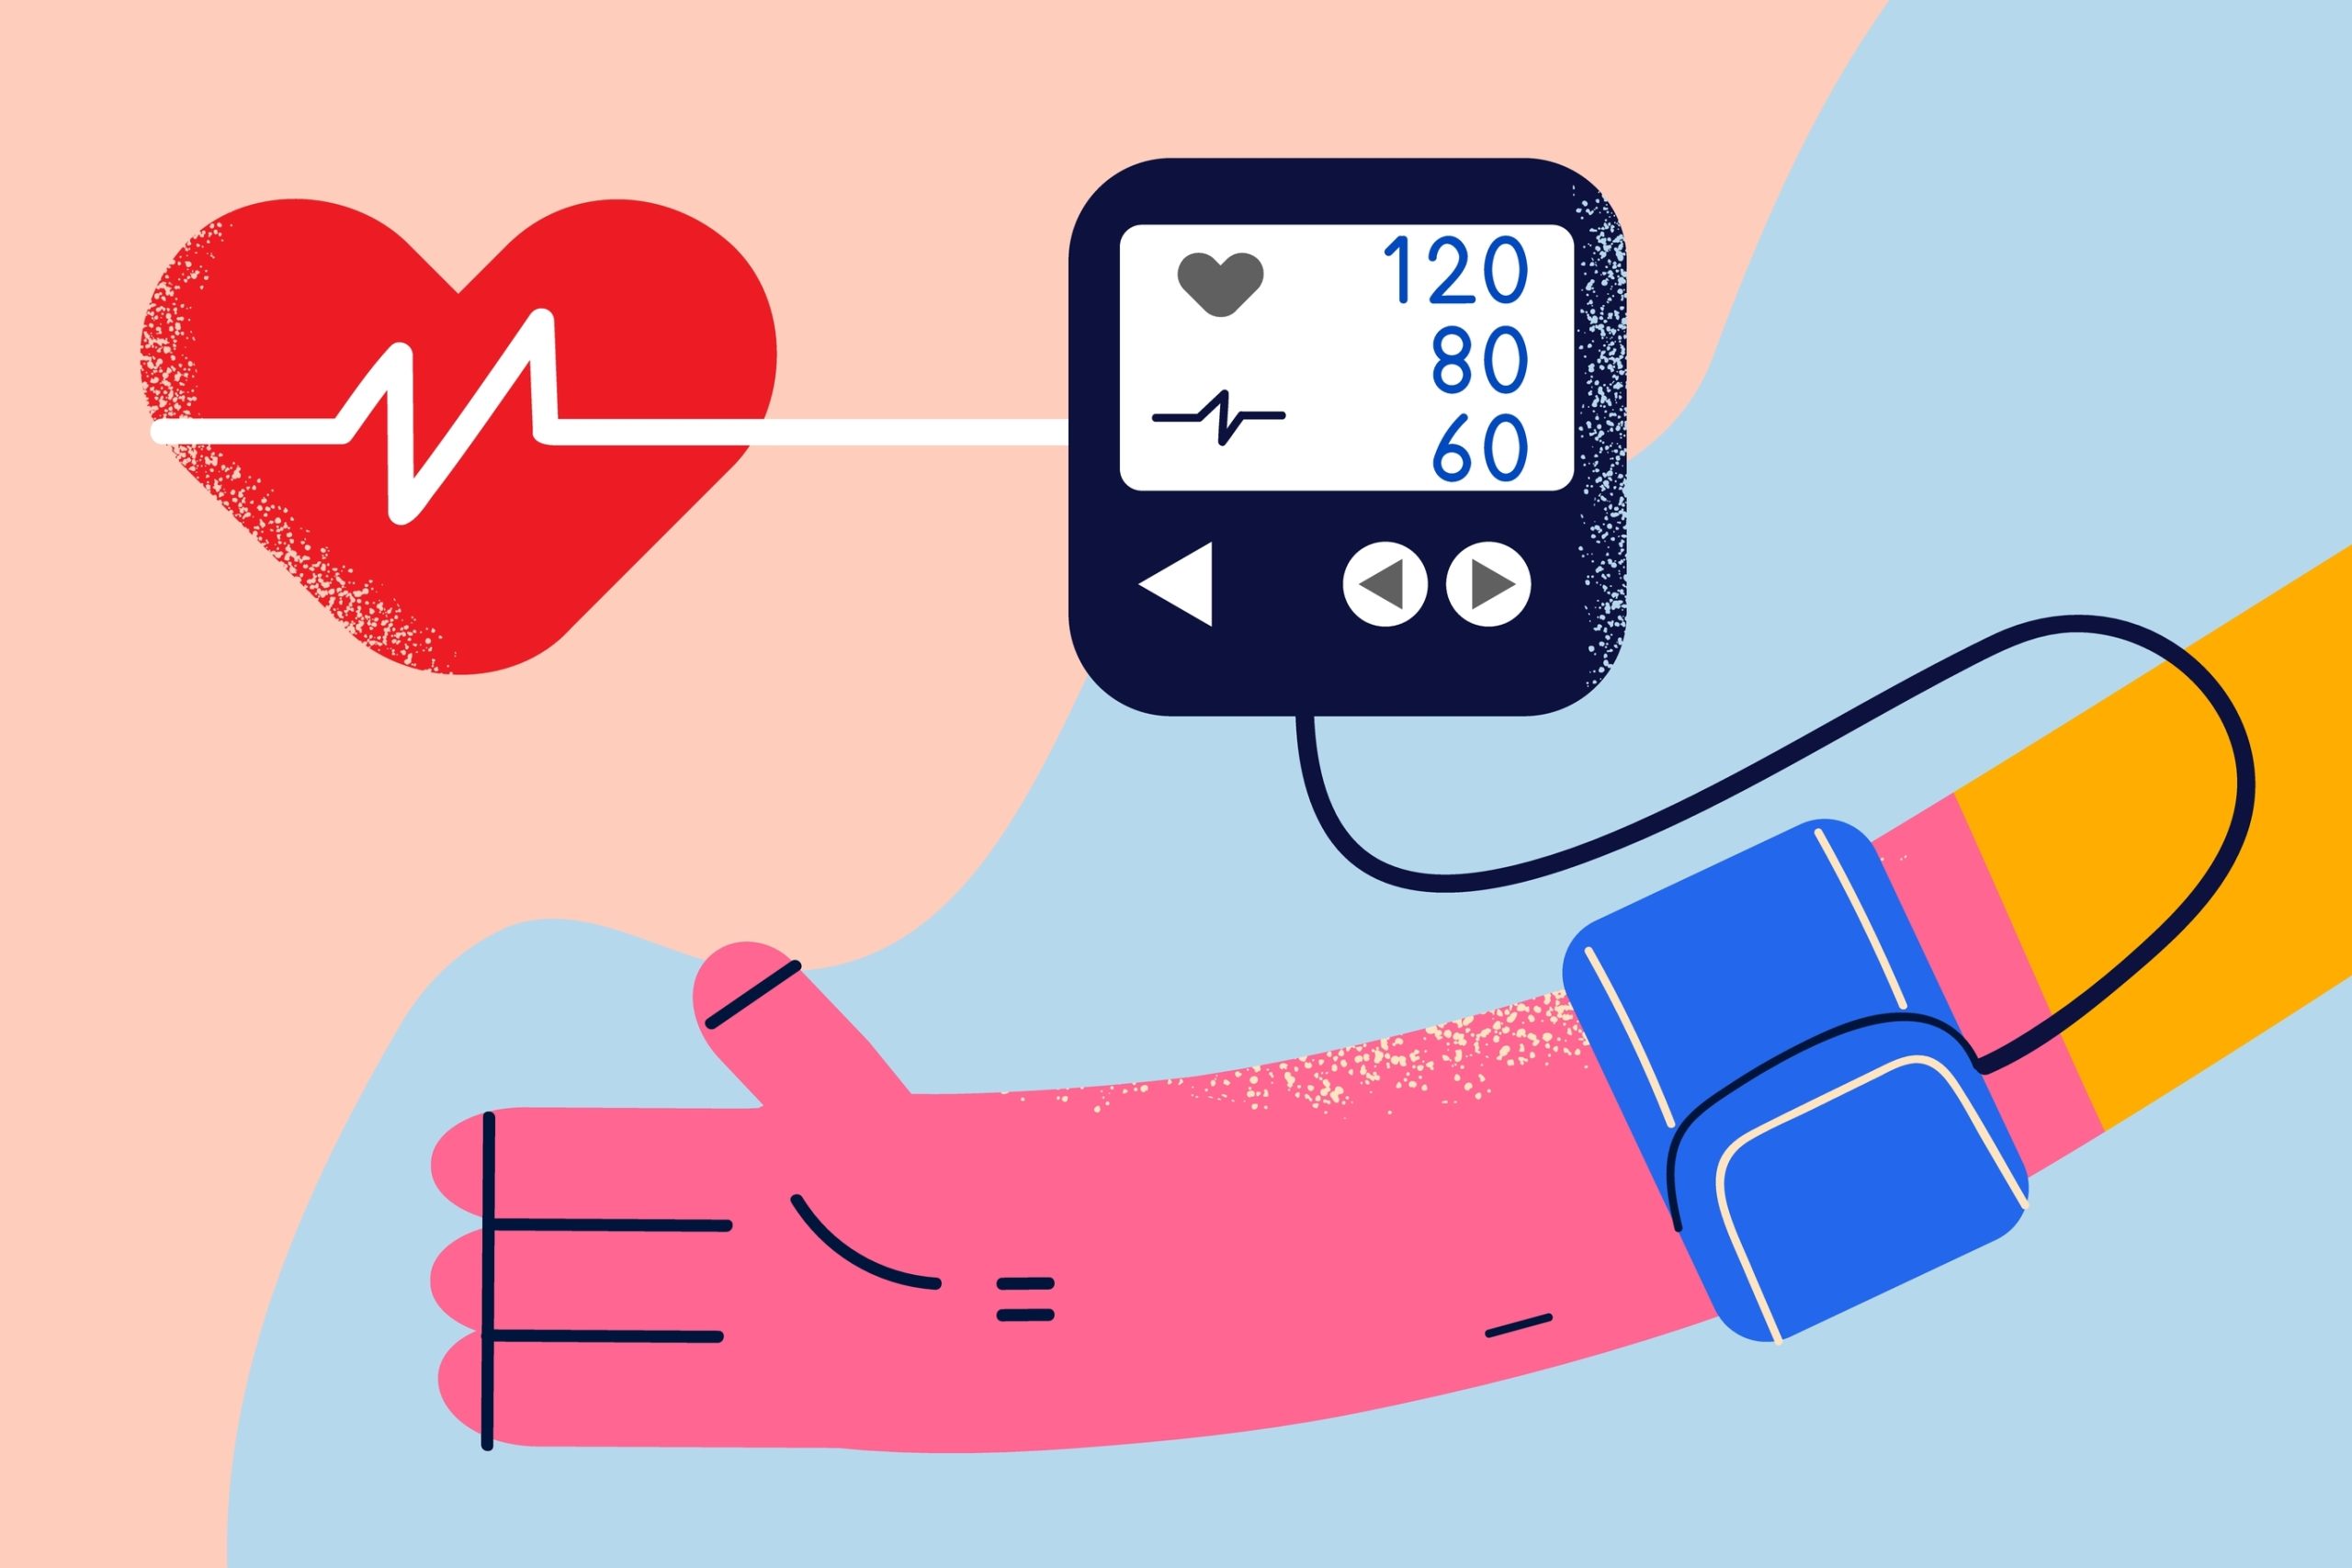 Ambulatory Blood Pressure Monitoring - Horizon Health Network